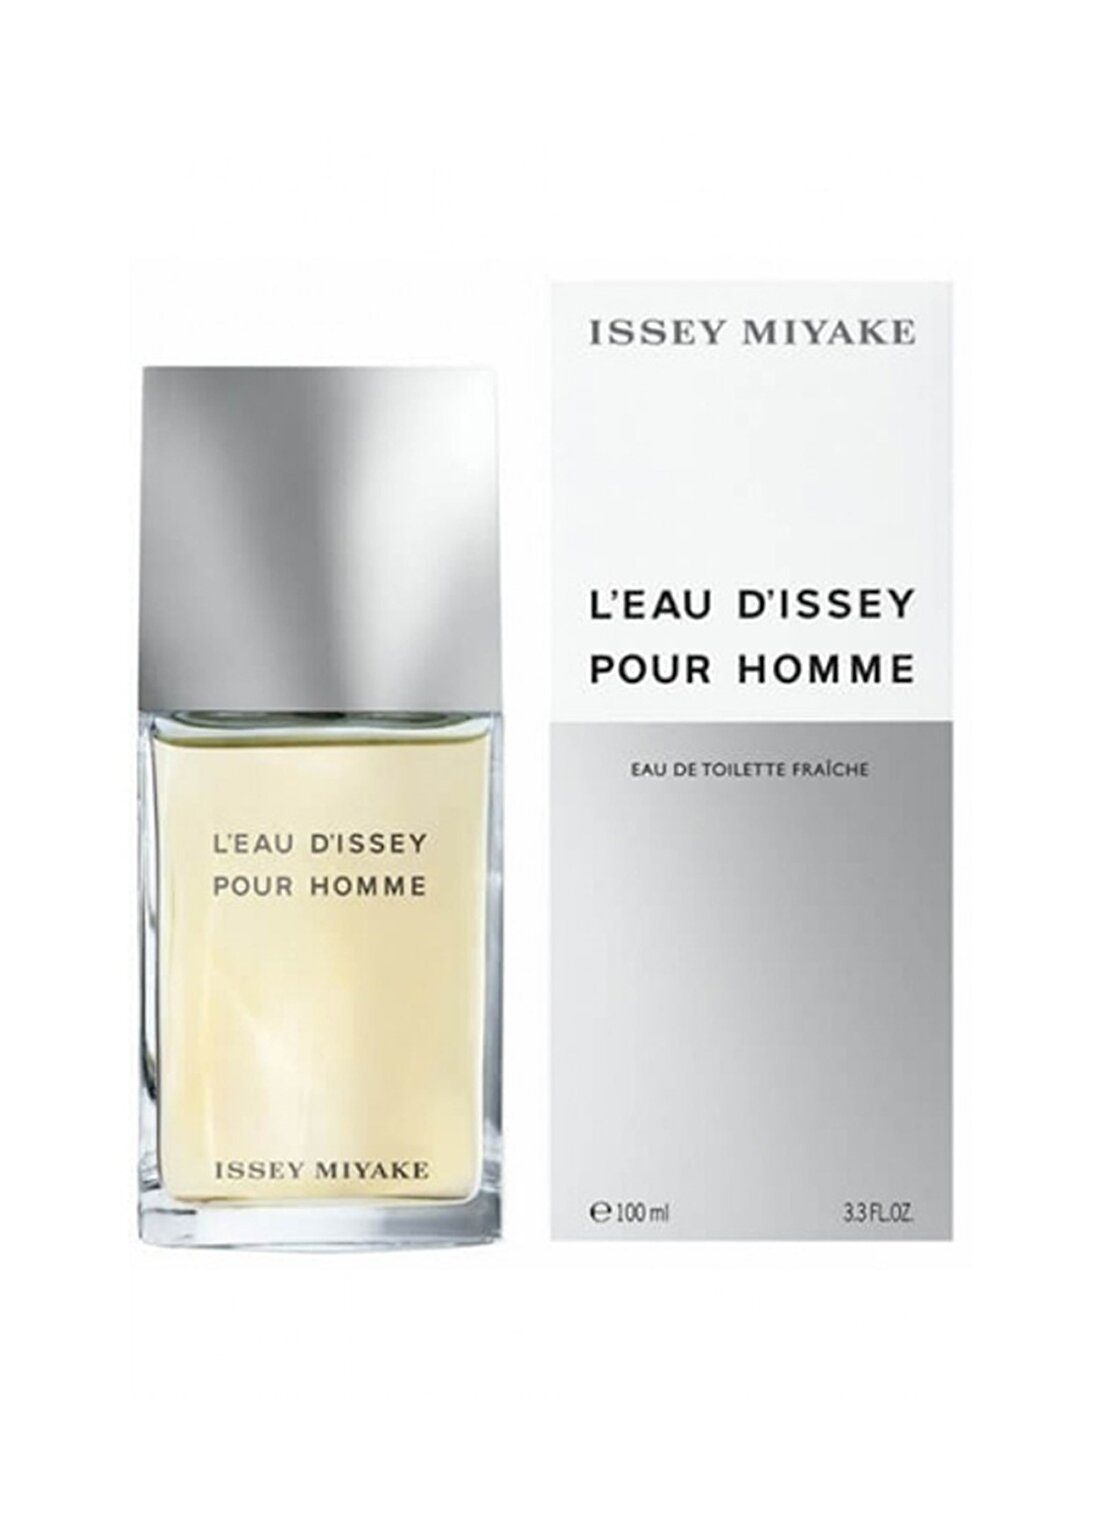 İssey Miyake L'eau D'issey Pour Homme Edt Fraiche 100 Ml Erkek Parfüm